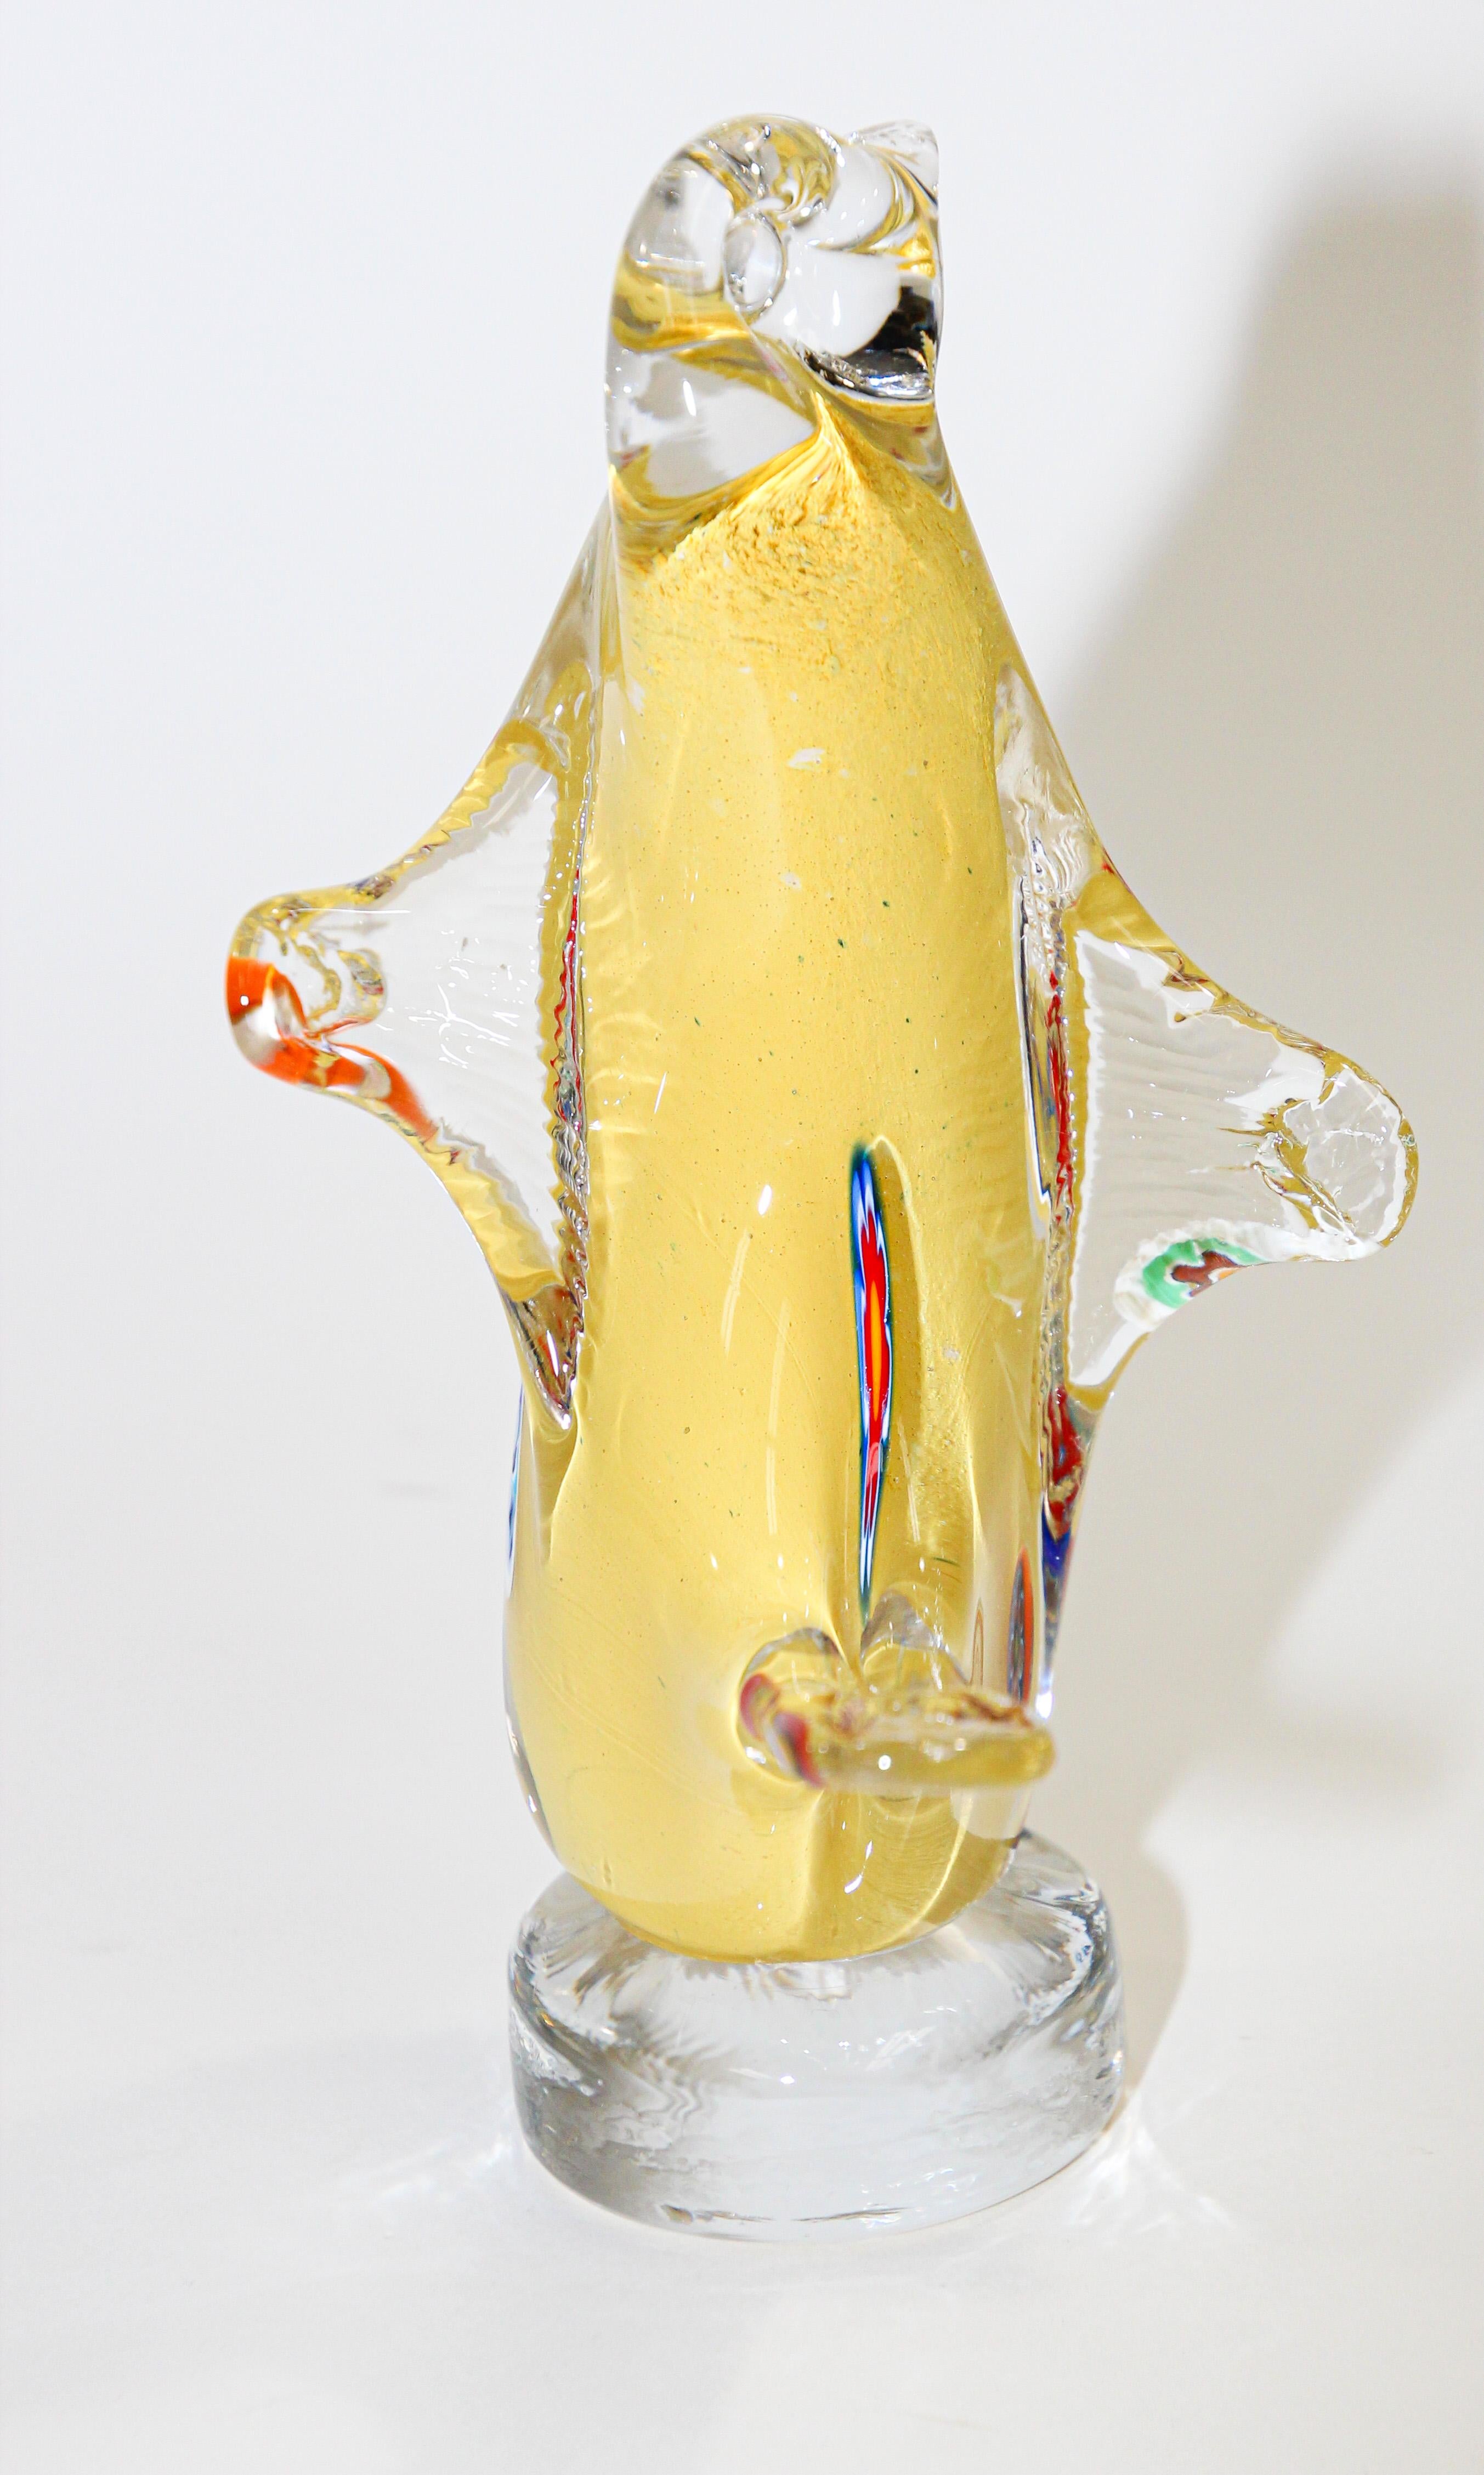 Vintage Murano art glass hand blown sculpture bird figurine.
Beautiful Mid-Century Modern hand blown glass bird.
The body of bubbles Italian art glass decorated in yellow white bubbles.
Midcentury era. Measures: 5